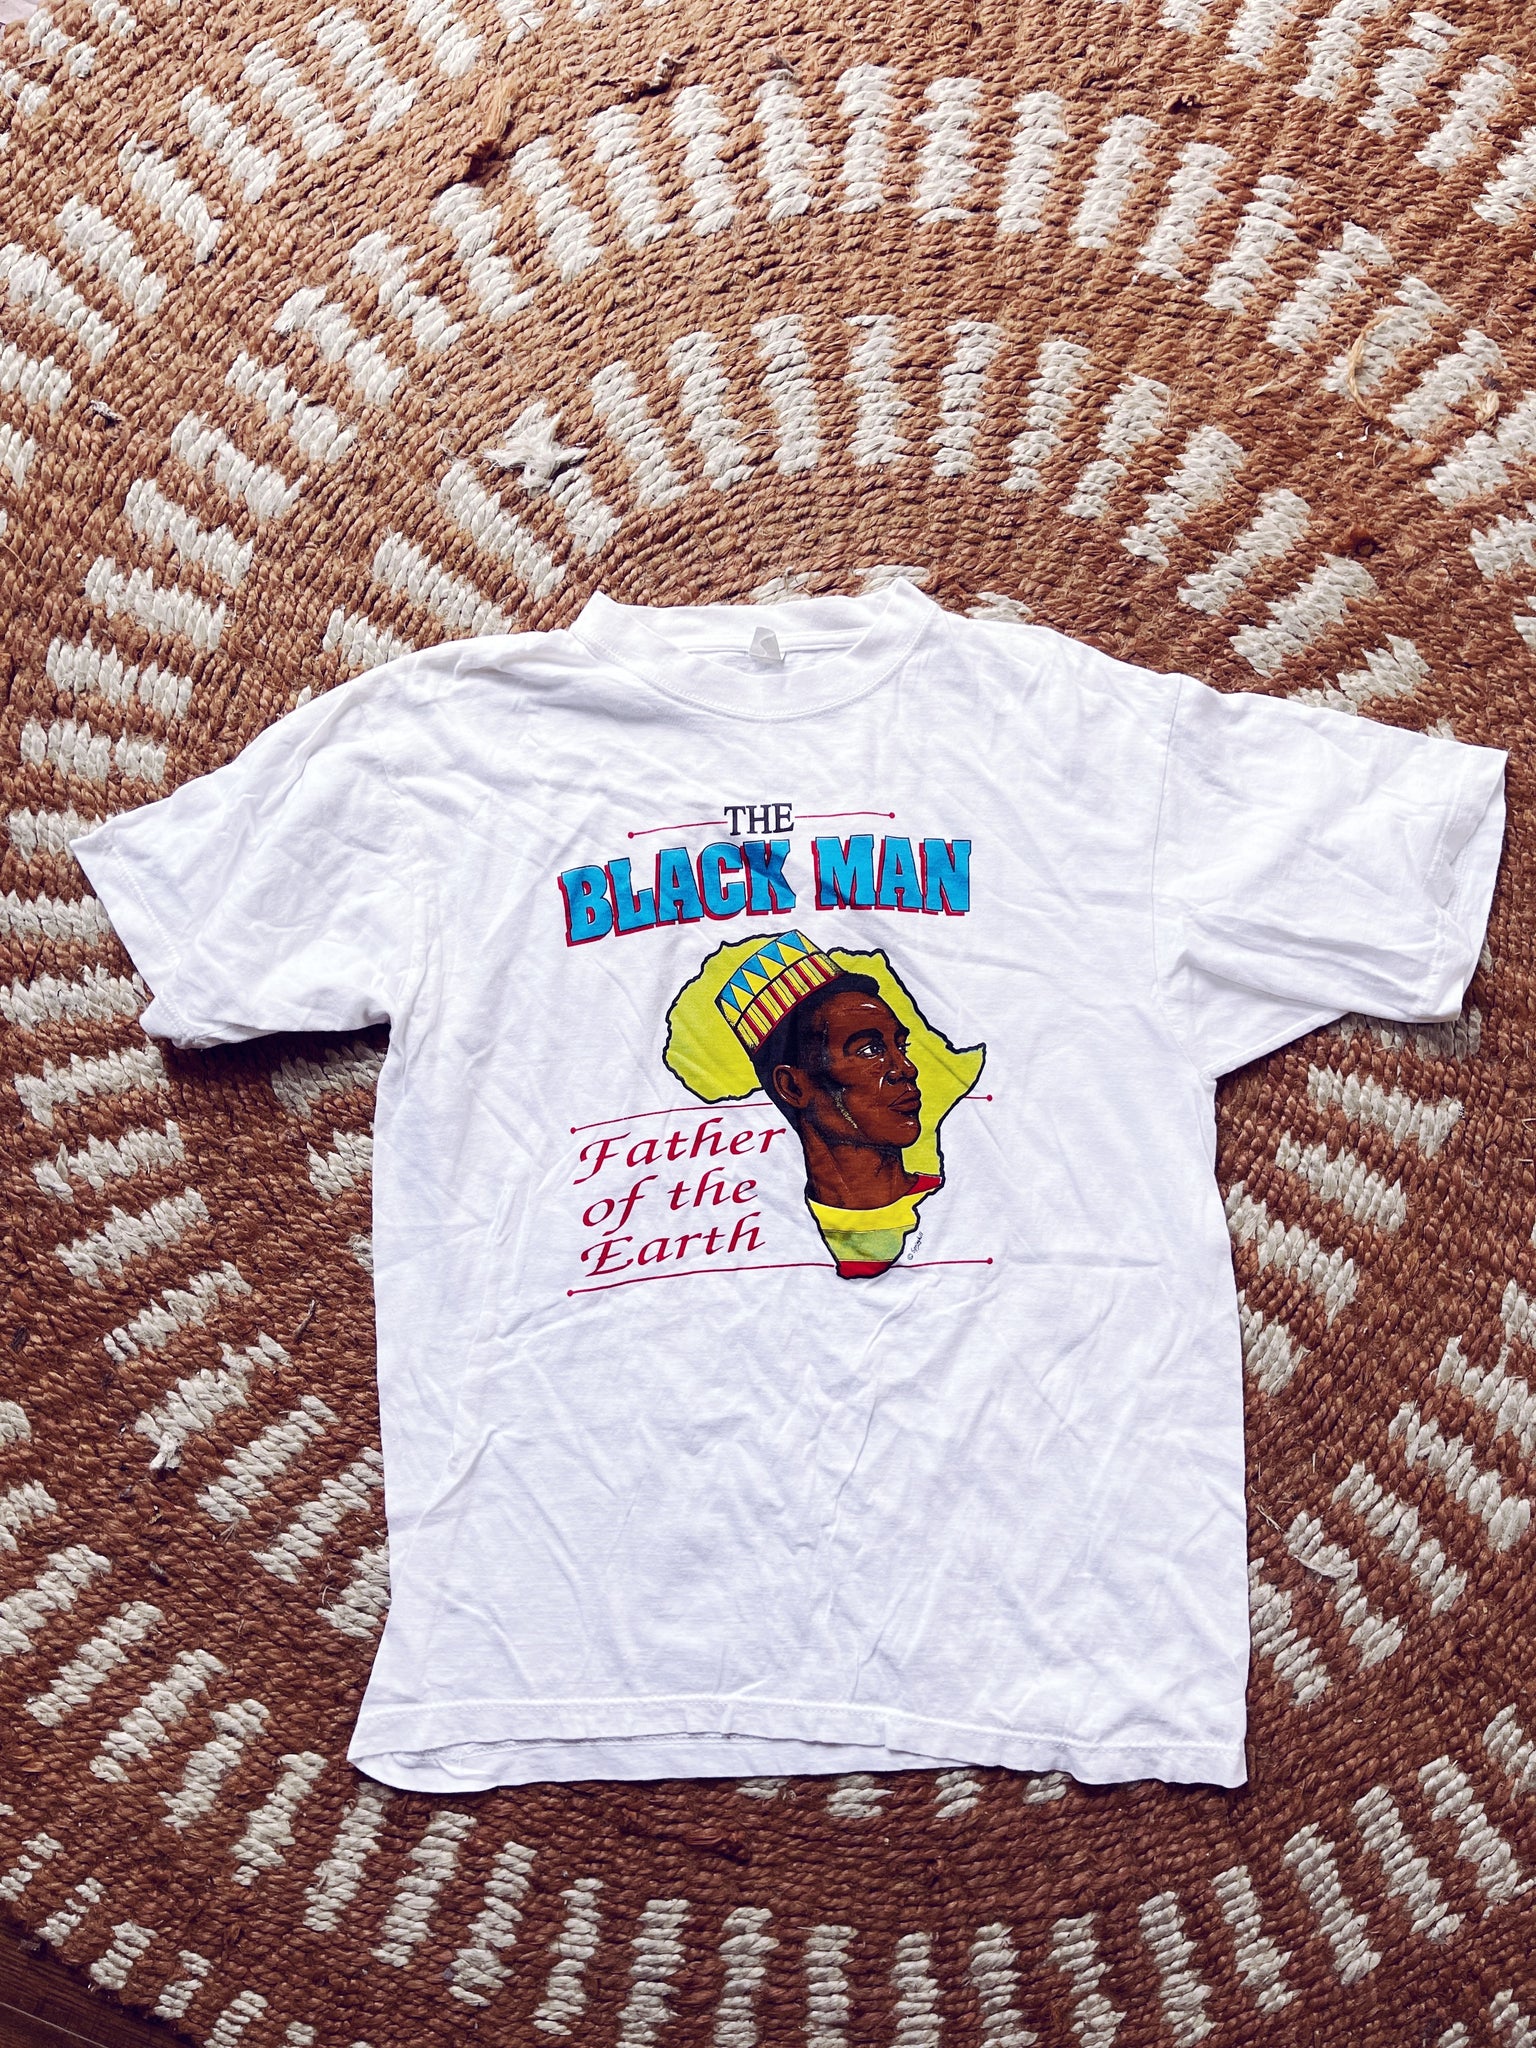 Vintage "The Black Man" T-Shirt (1990's)